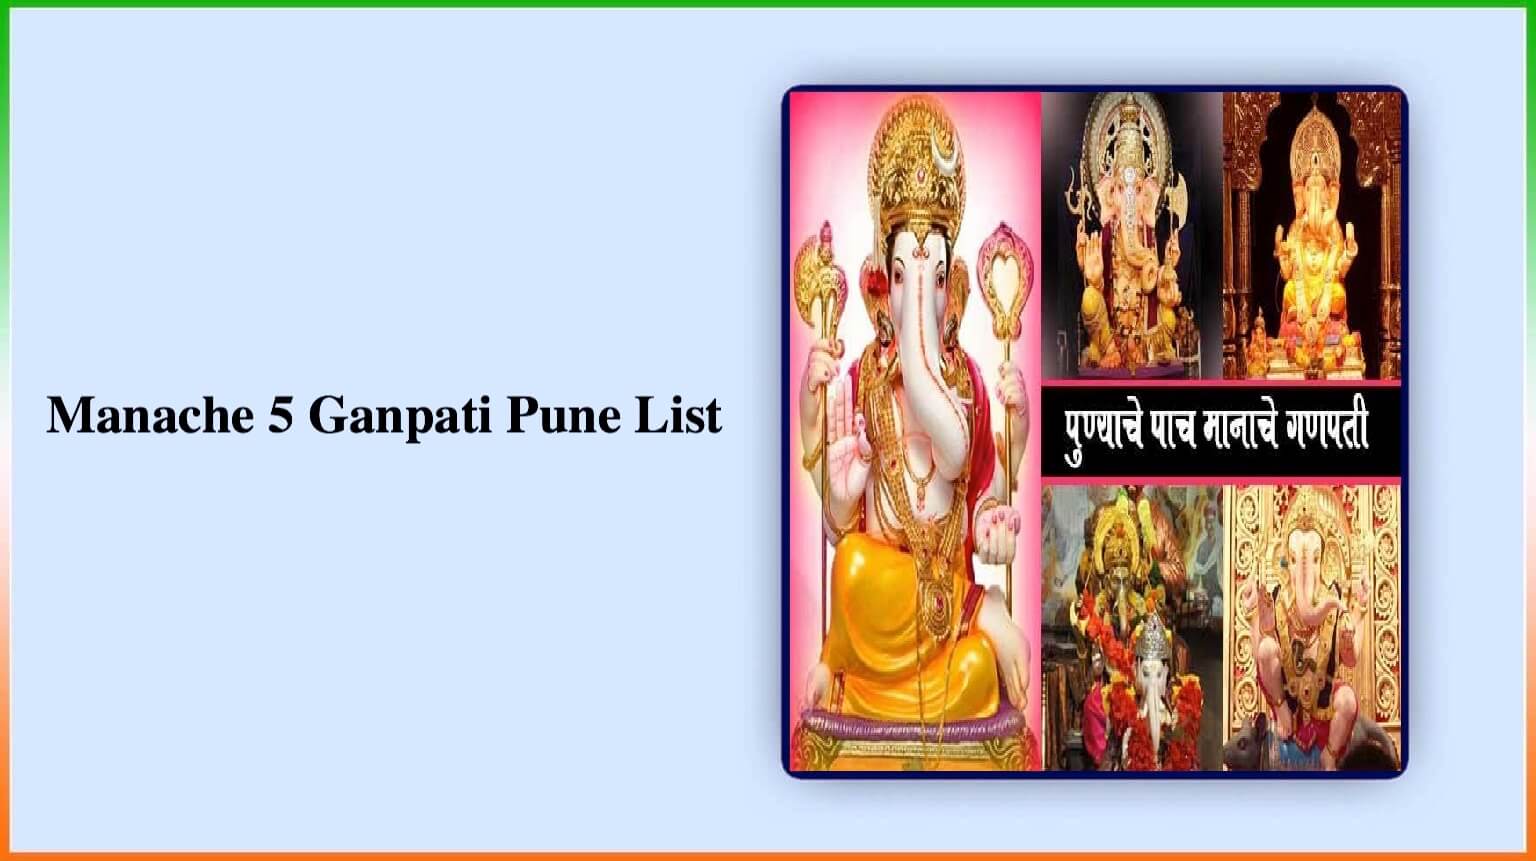 Manache 5 Ganpati Pune List